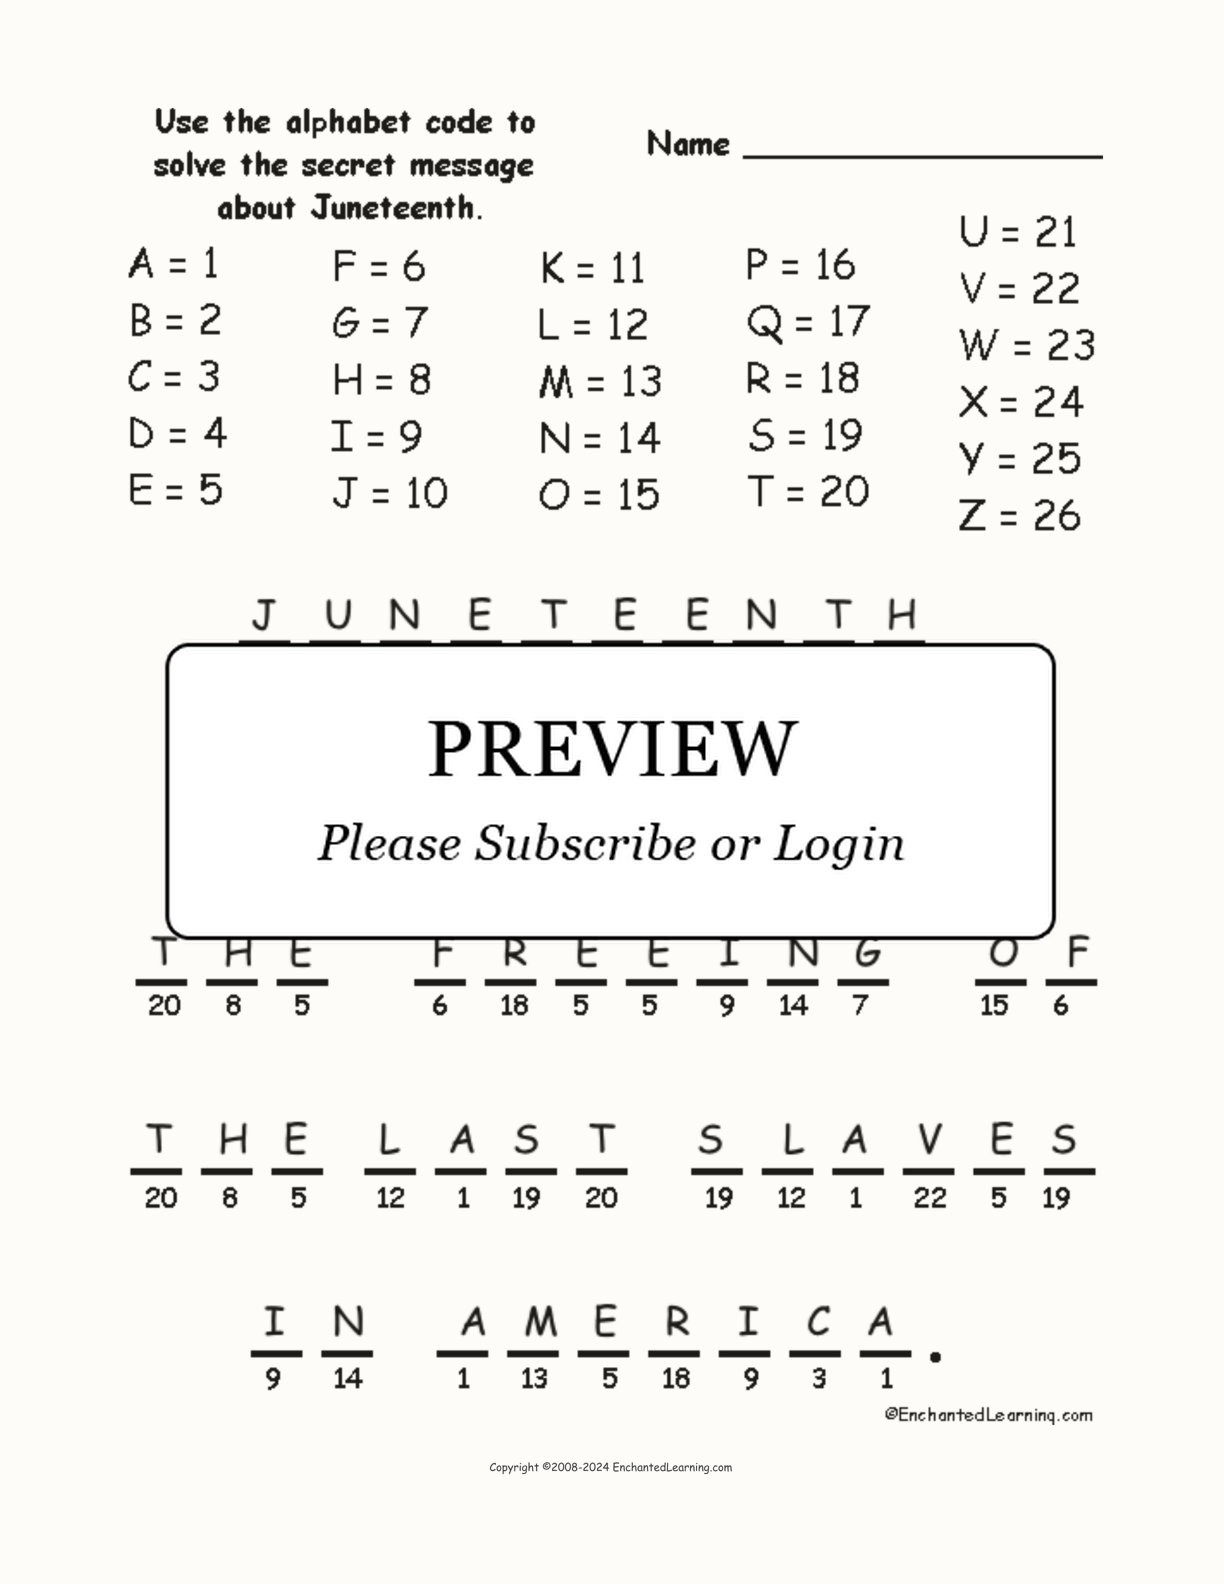 Juneteenth Alphabet Code interactive worksheet page 2